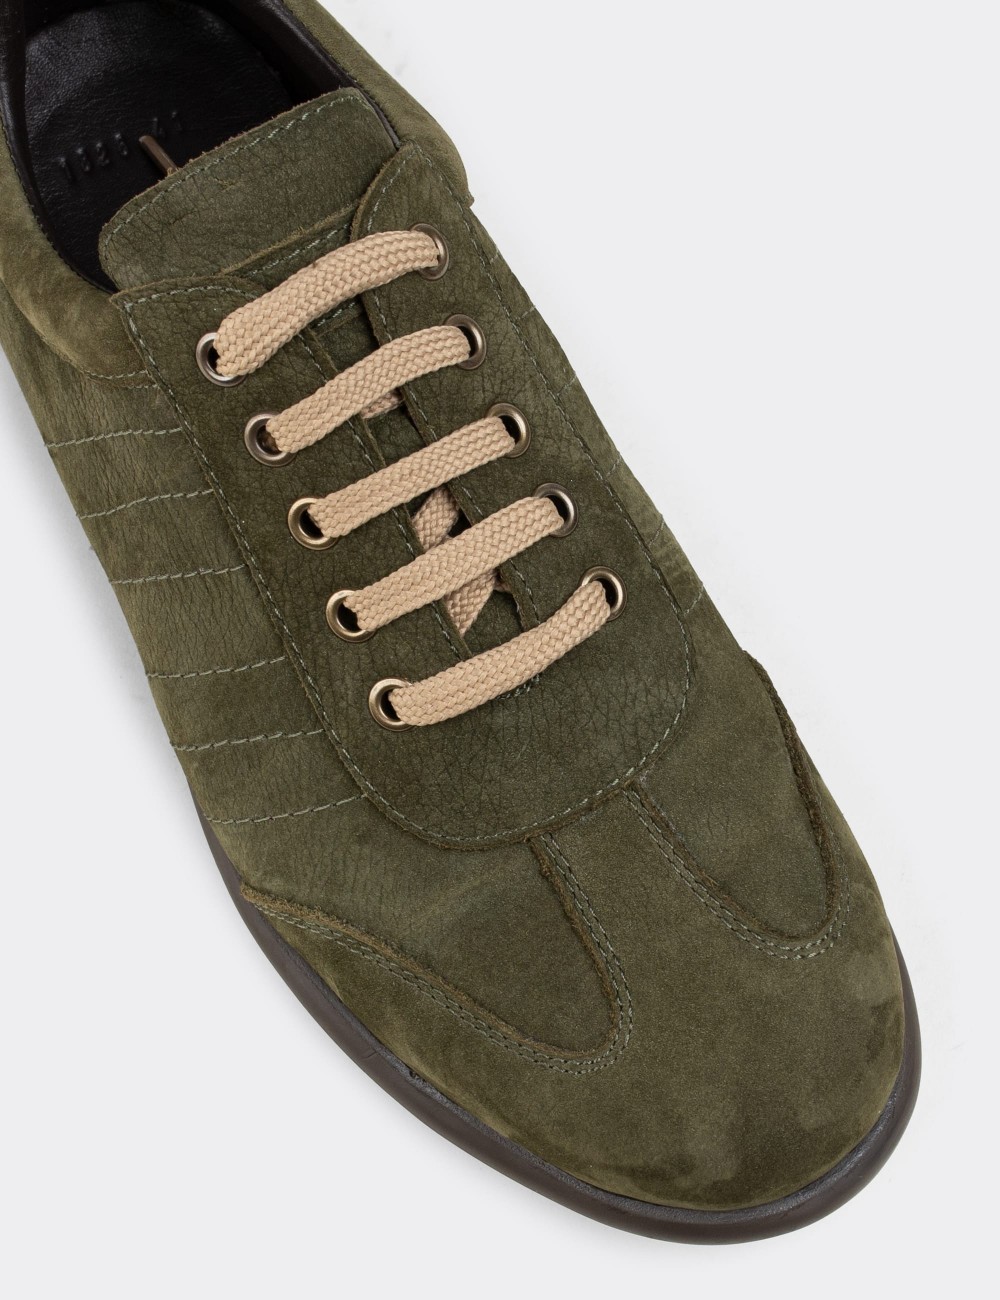 Green Nubuck Leather Lace-up Shoes - 01826MYSLC02